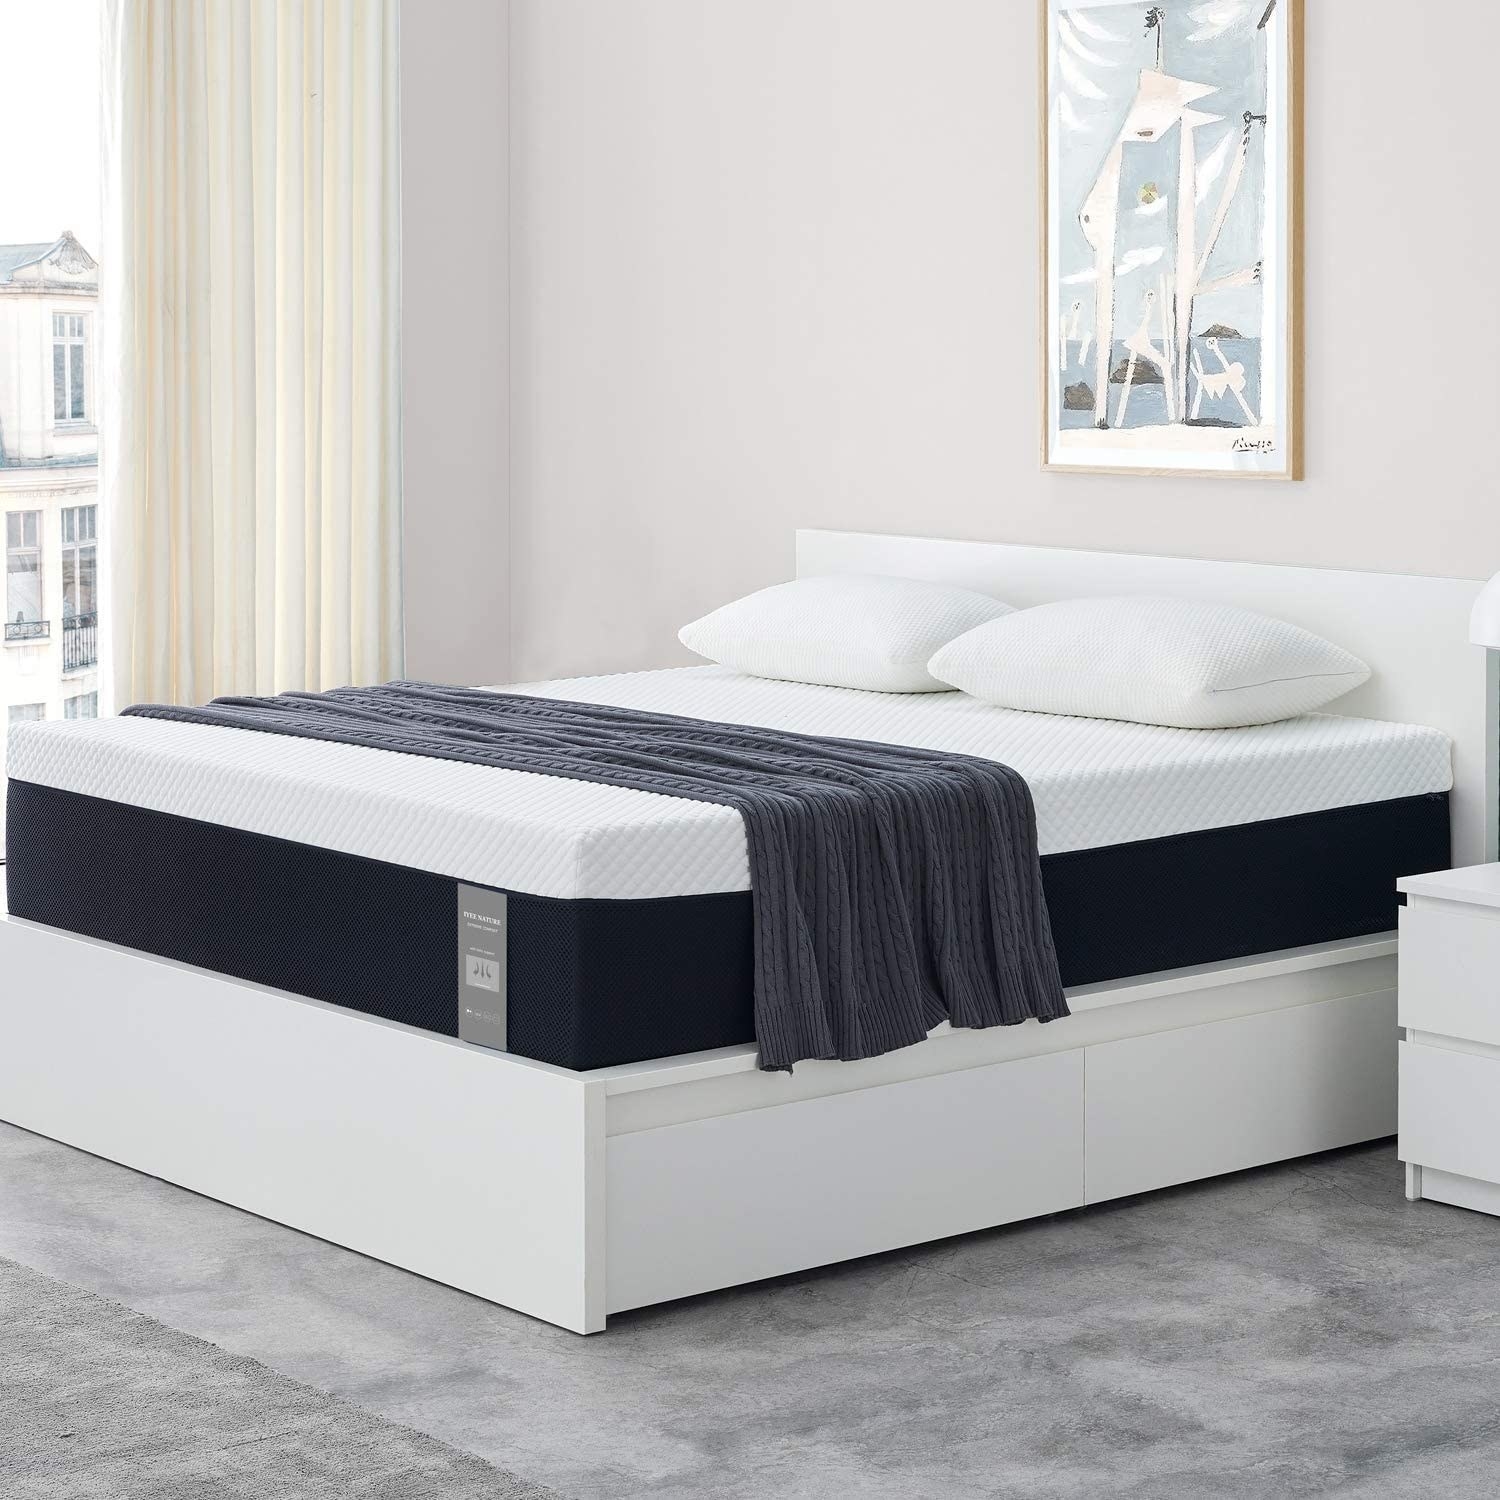 A mattress on top of a bed frame